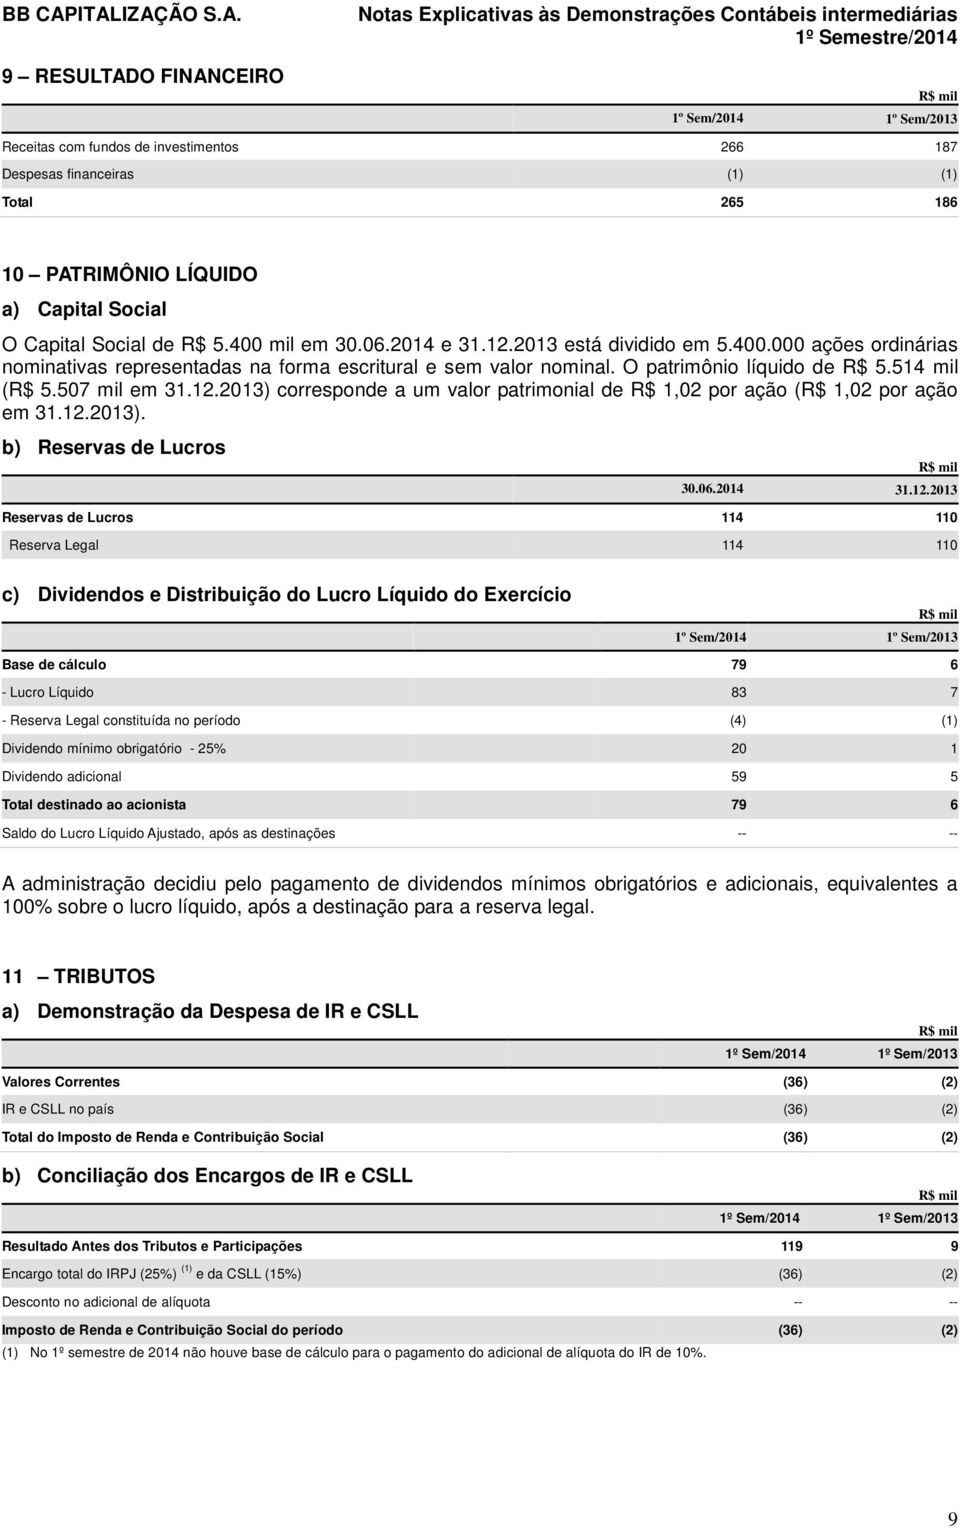 O patrimônio líquido de R$ 5.514 mil (R$ 5.507 mil em 31.12.